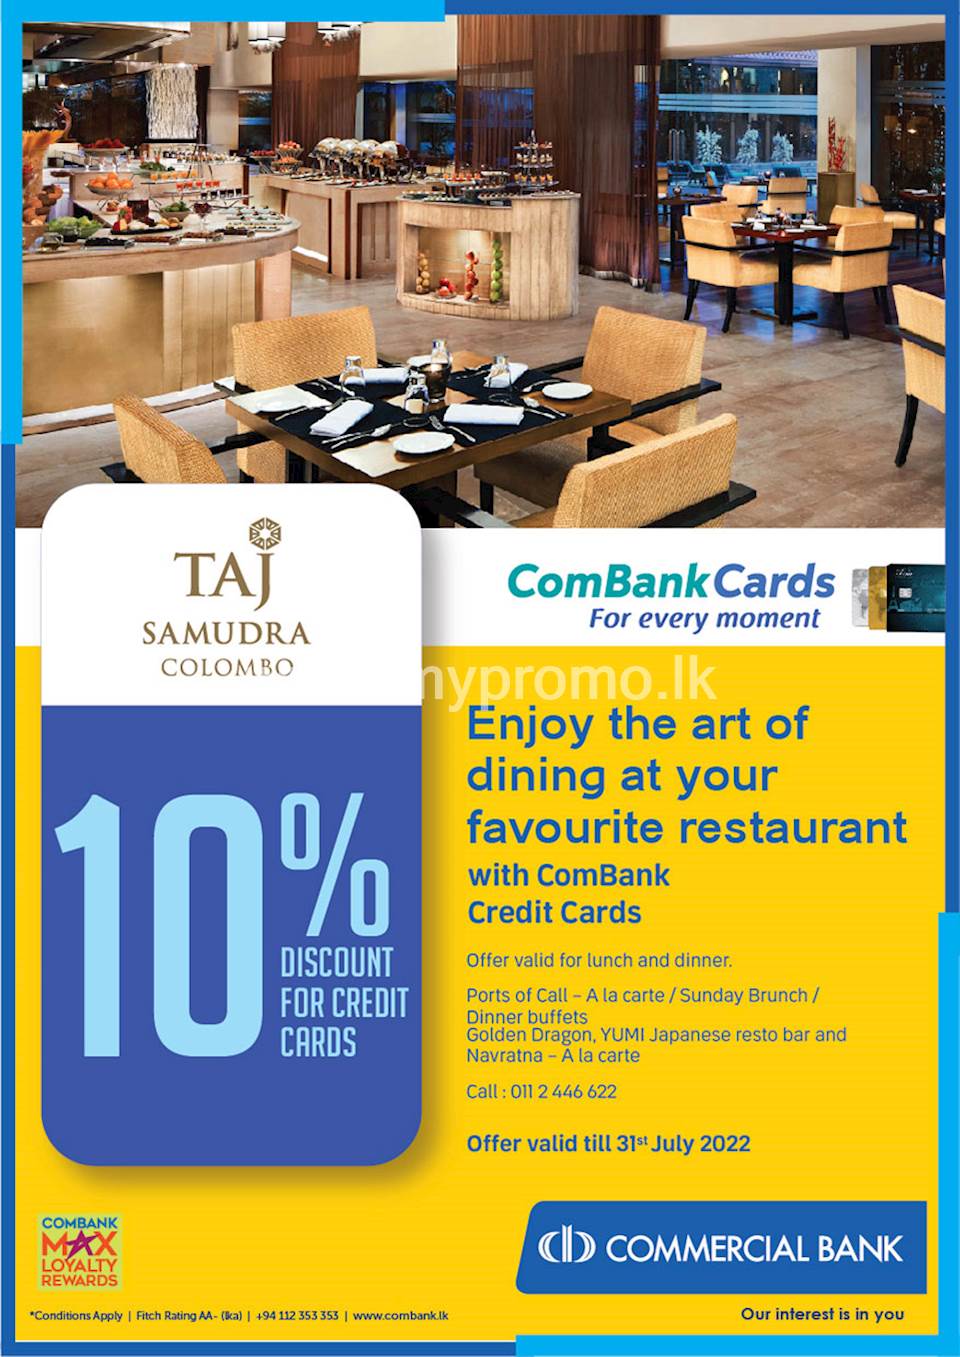 Enjoy 10% discount for ComBank Credit Cards at Taj Samudra